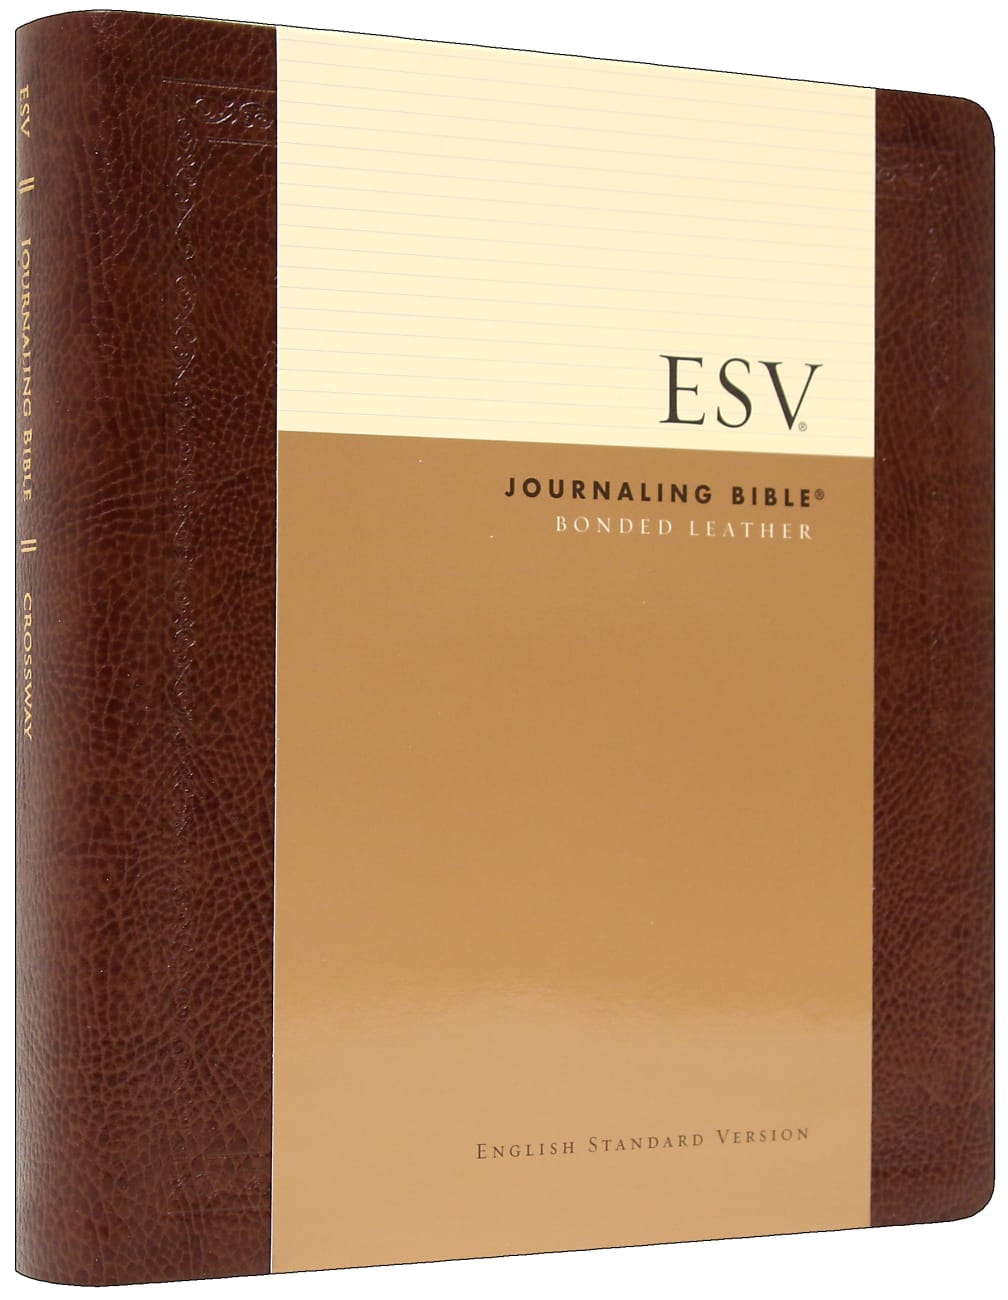 ESV Journaling Bible Mocha Threshold (Black Letter Edition) Bonded Leather